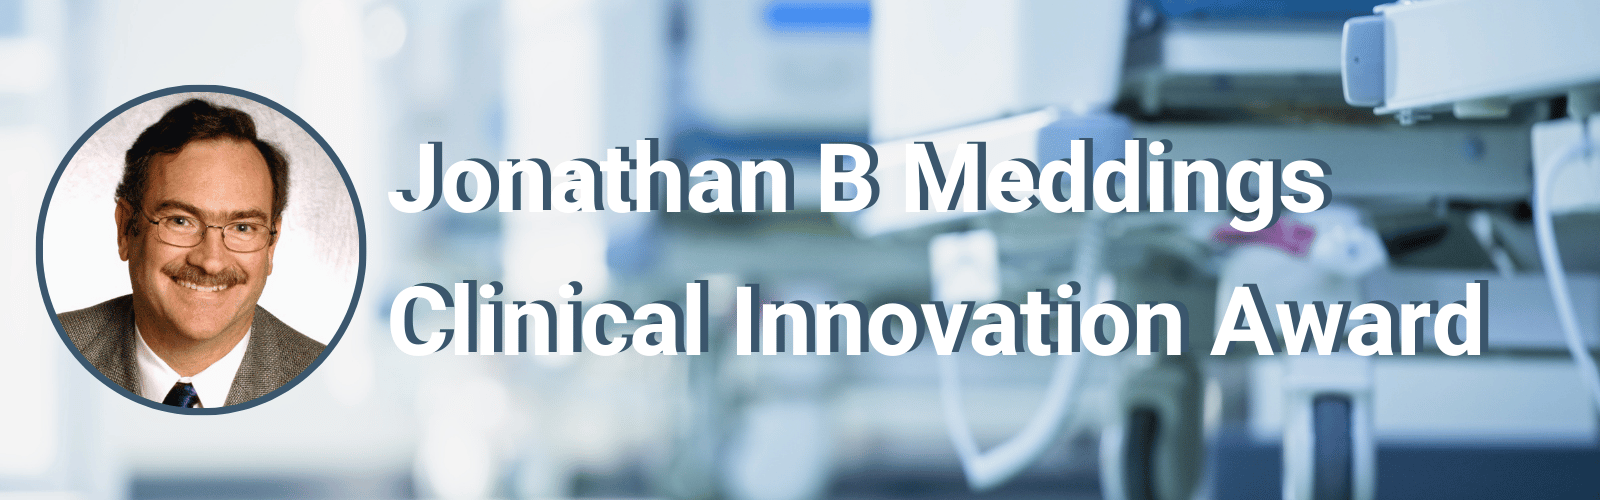 Jonathan B. Meddings Clinical Innovation Award